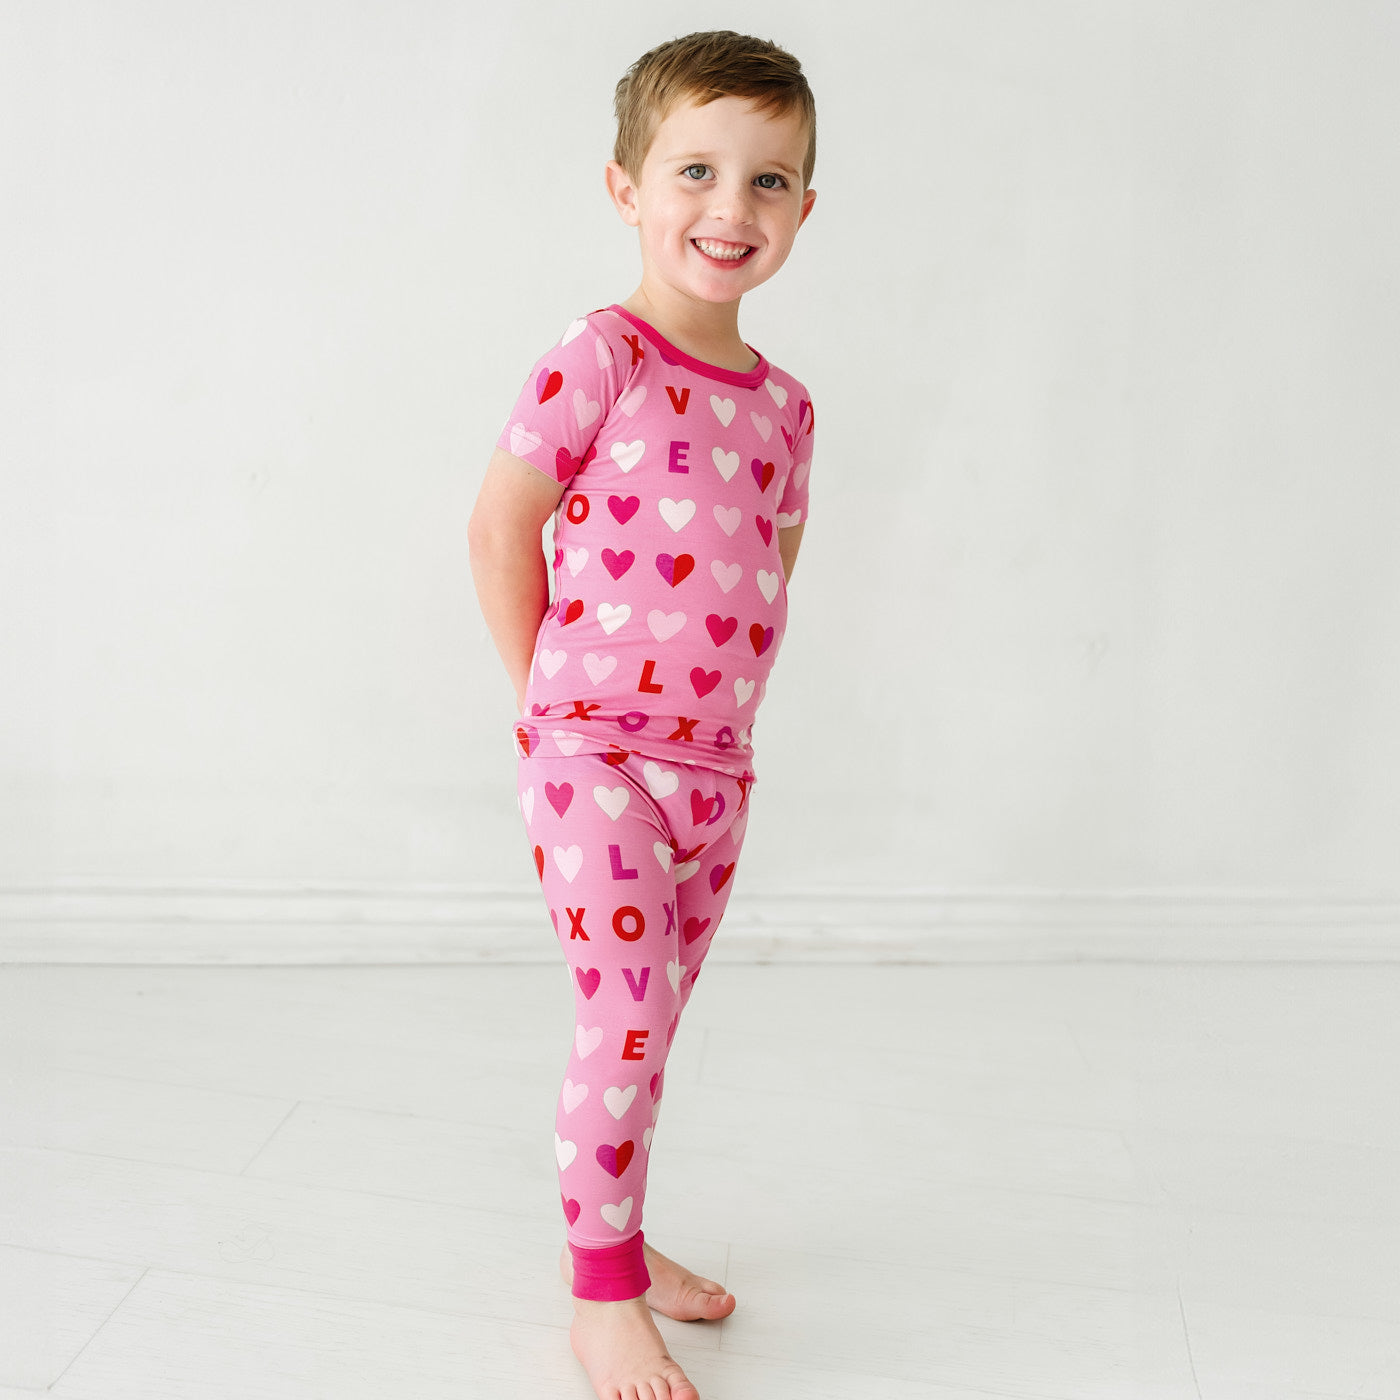 Third alternate image of a child wearing Pink XOXO two piece short sleeve pajama set